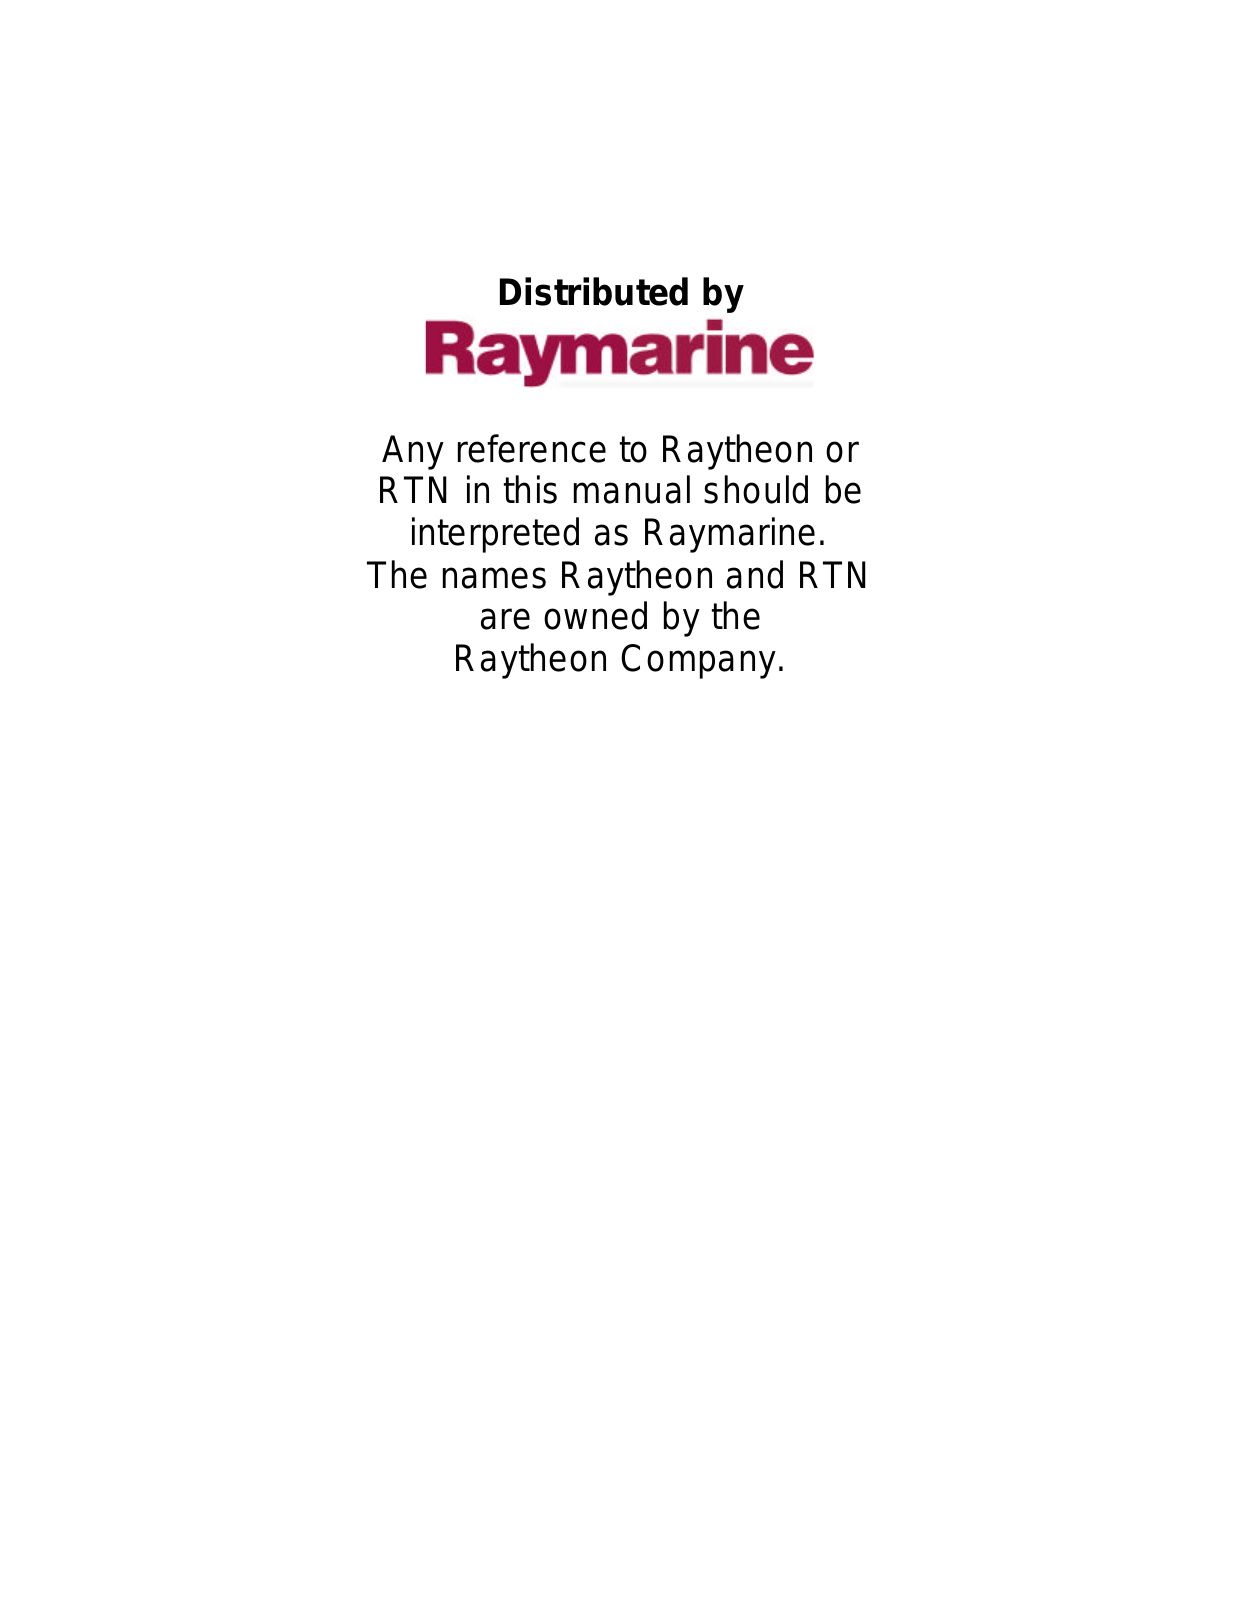 Raymarine APELCO DXL-6300 Manual